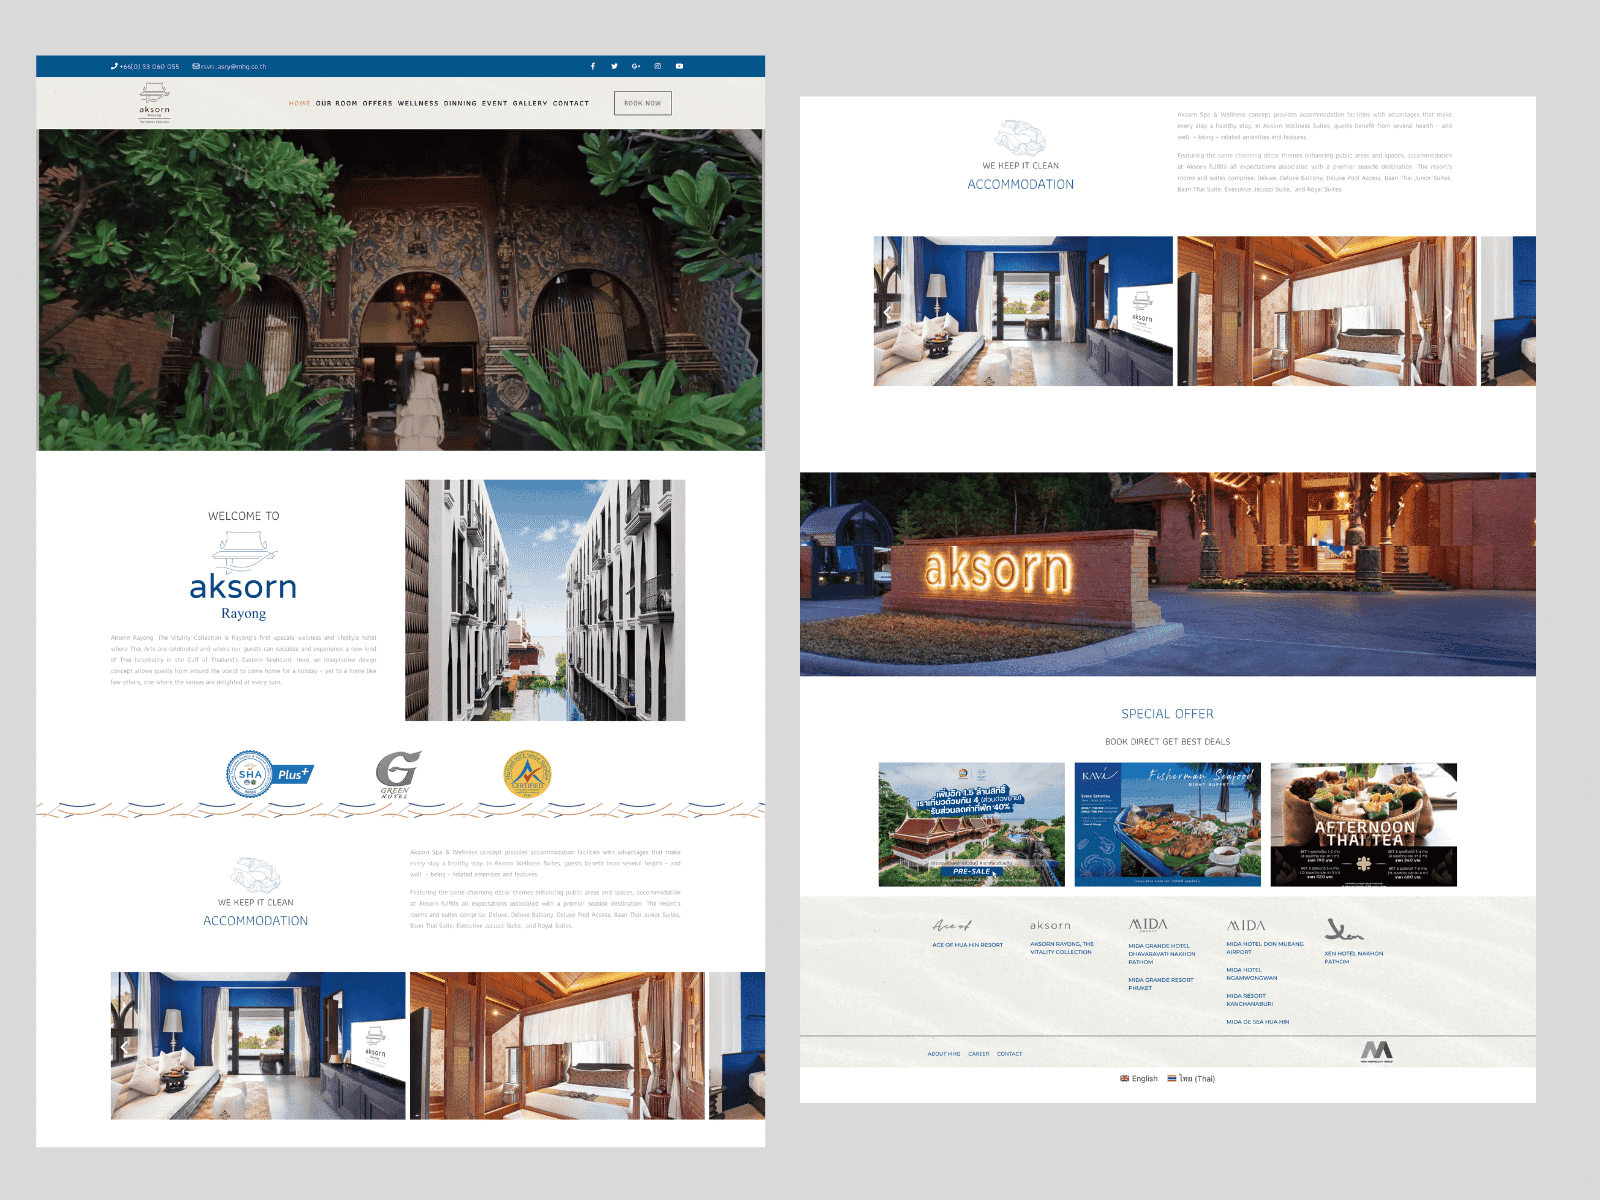 Aksorn Rayong Website Design